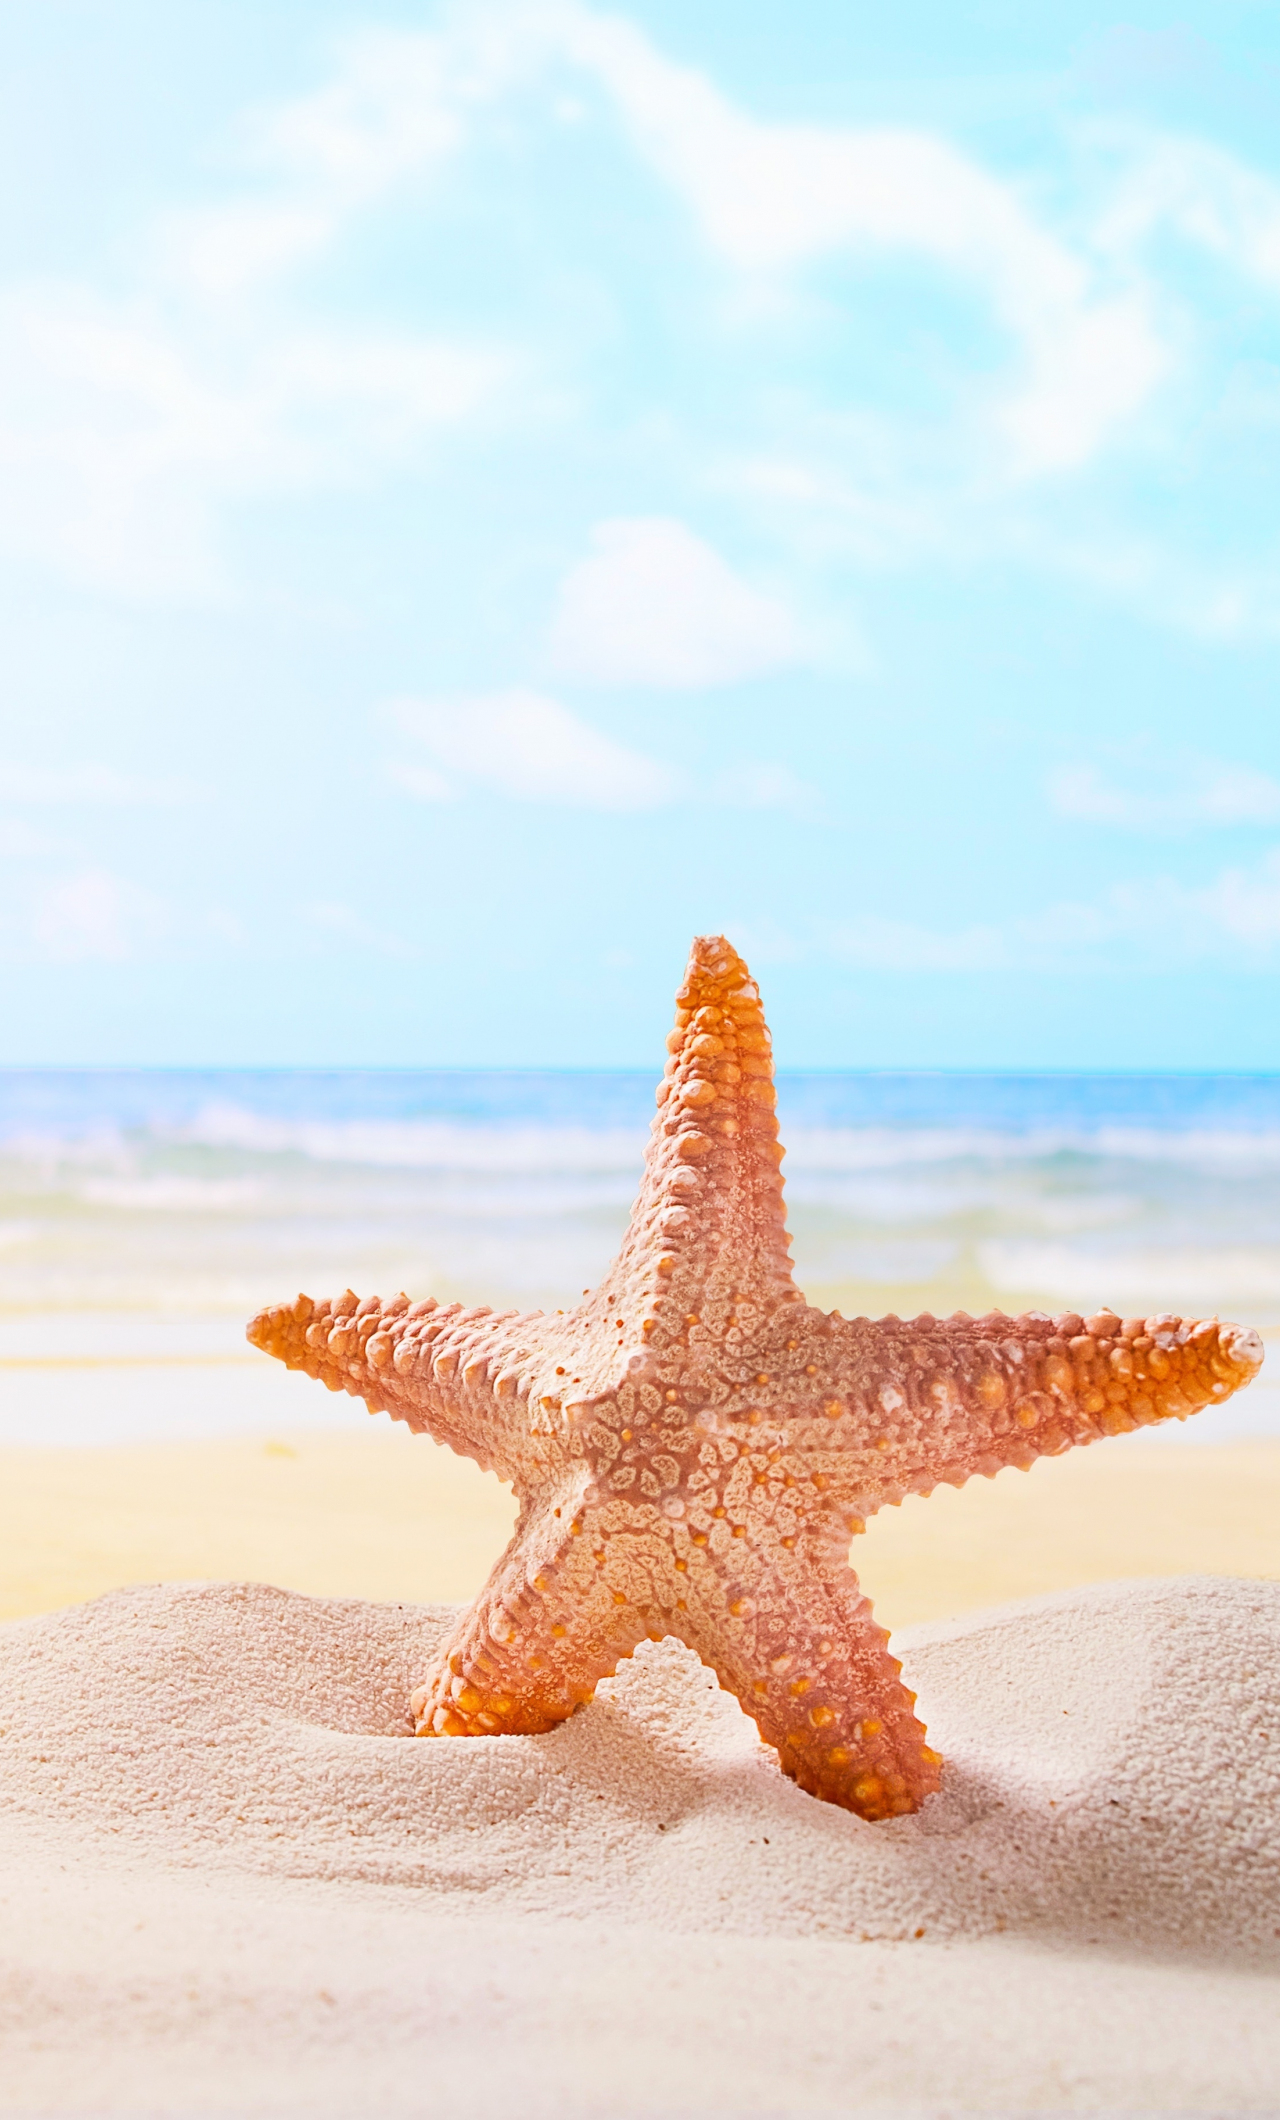 1280x2120 Download sand, starfish, beach wallpaper, iphone 6 plus, hd image, background, 4992